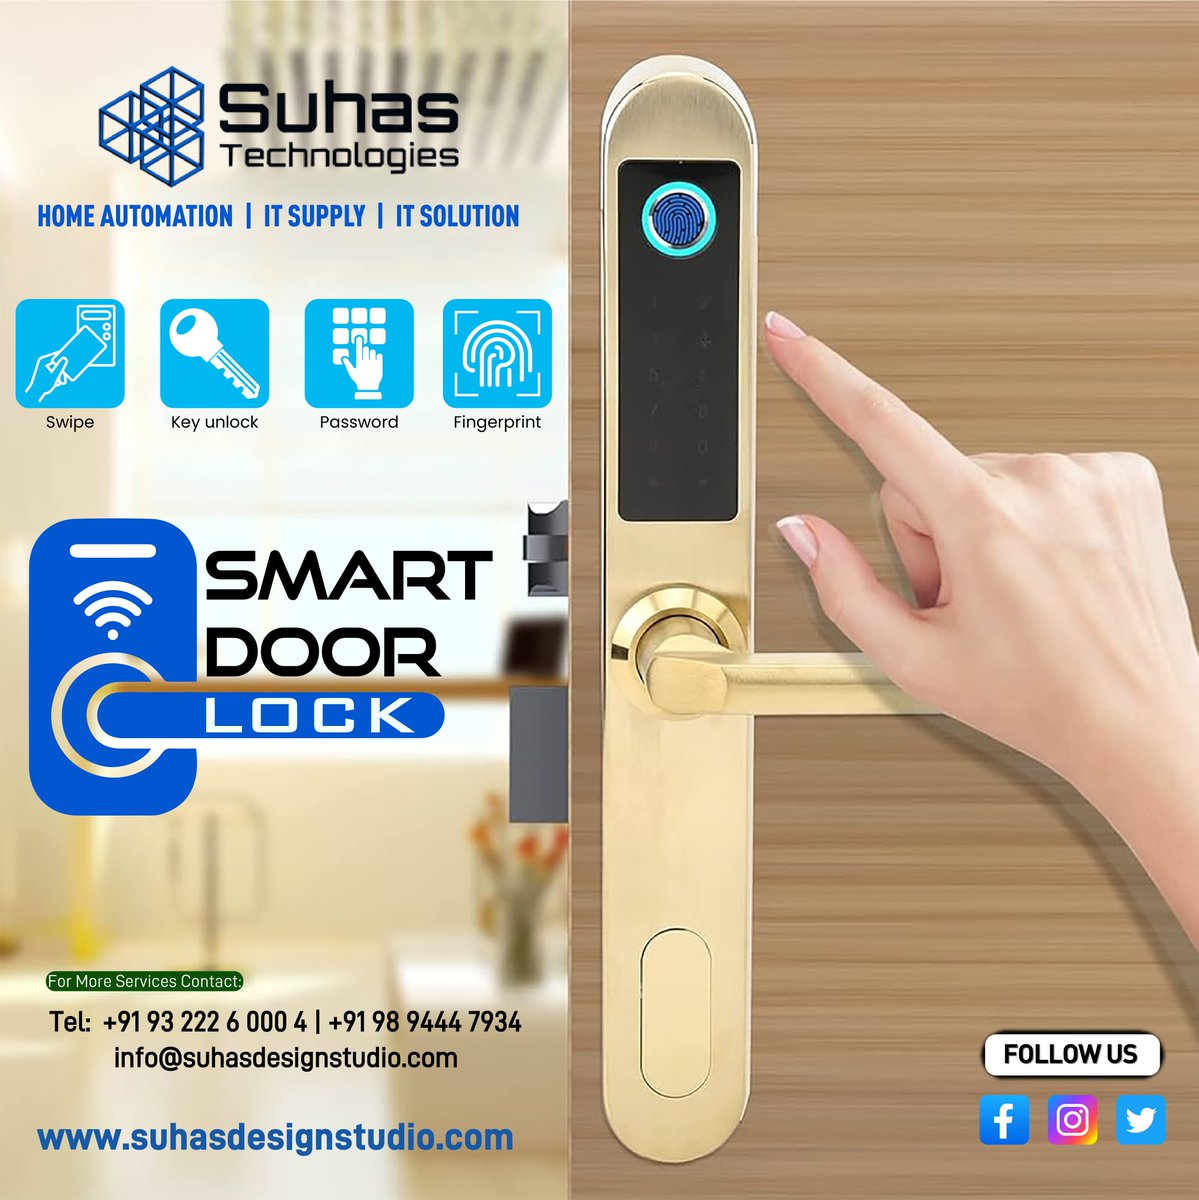 The #smartdoor and #smartdoorlocks from Suhas Technologies will increase the #security of your house! 

Visit suhasdesignstudio.com

#SmartHome #Automation #Convenience #SmartDoors #DoorLocks #Locks #Innovation #SuhasTechnologies #TechSavvy #HomeAutomation #EffortlessLiving